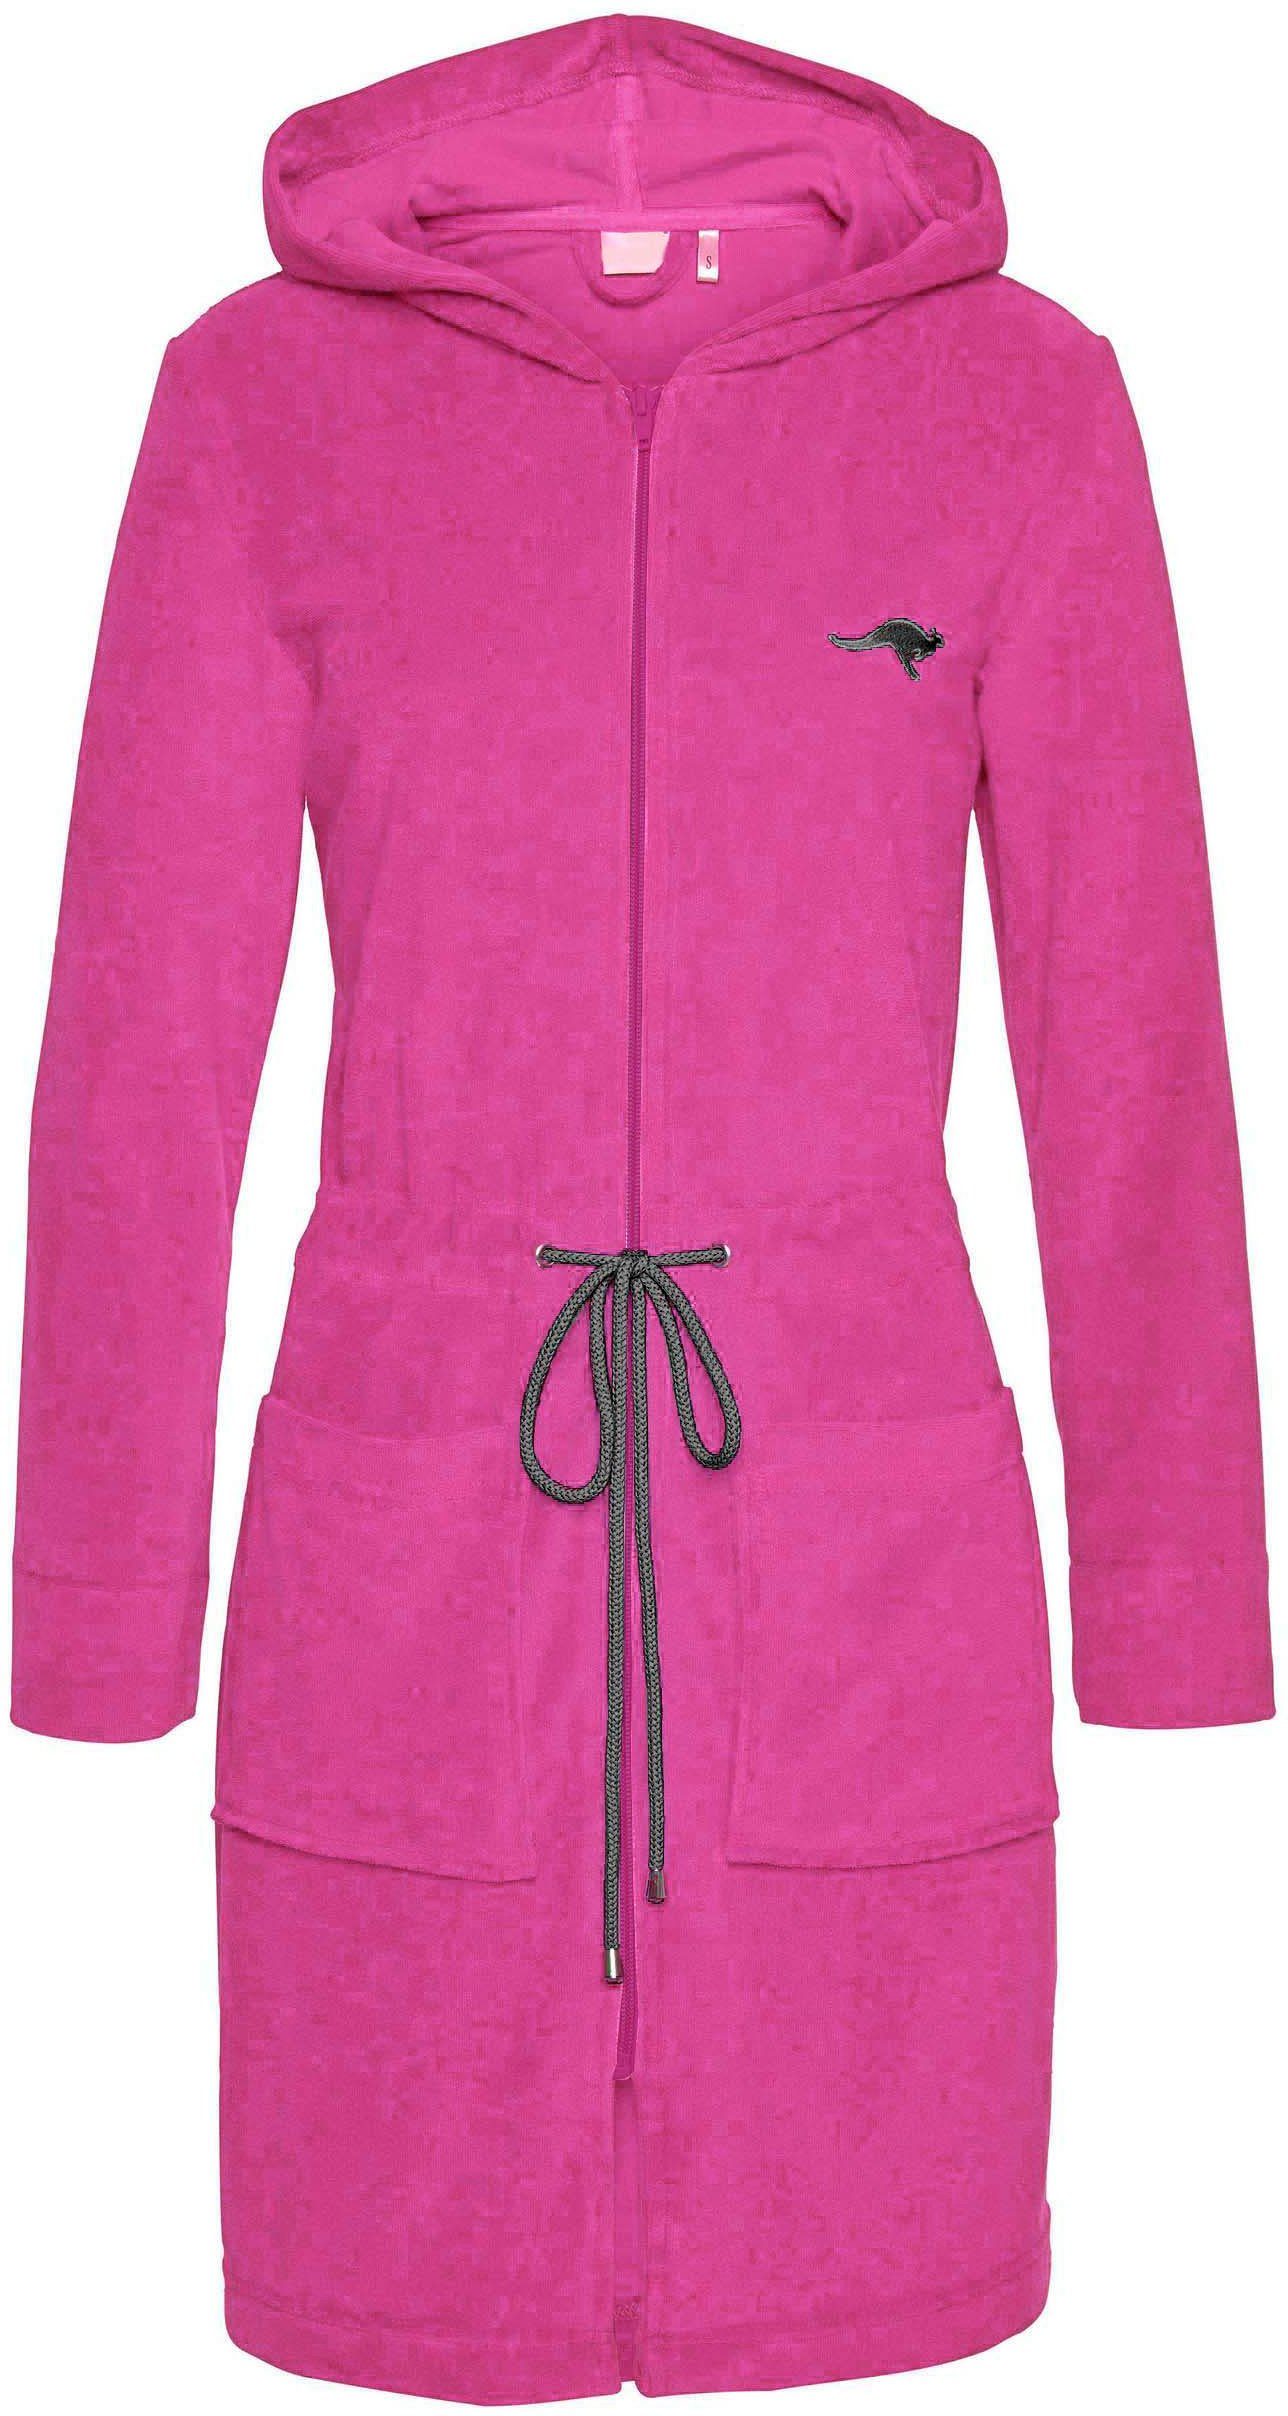 KangaROOS Damenbademantel Kira, Kurzform, Leichtfrottier, Kapuze, Reißverschluss, mit Bindekordel, kurz, Bademäntel für Damen, XS-3XL pink/grau